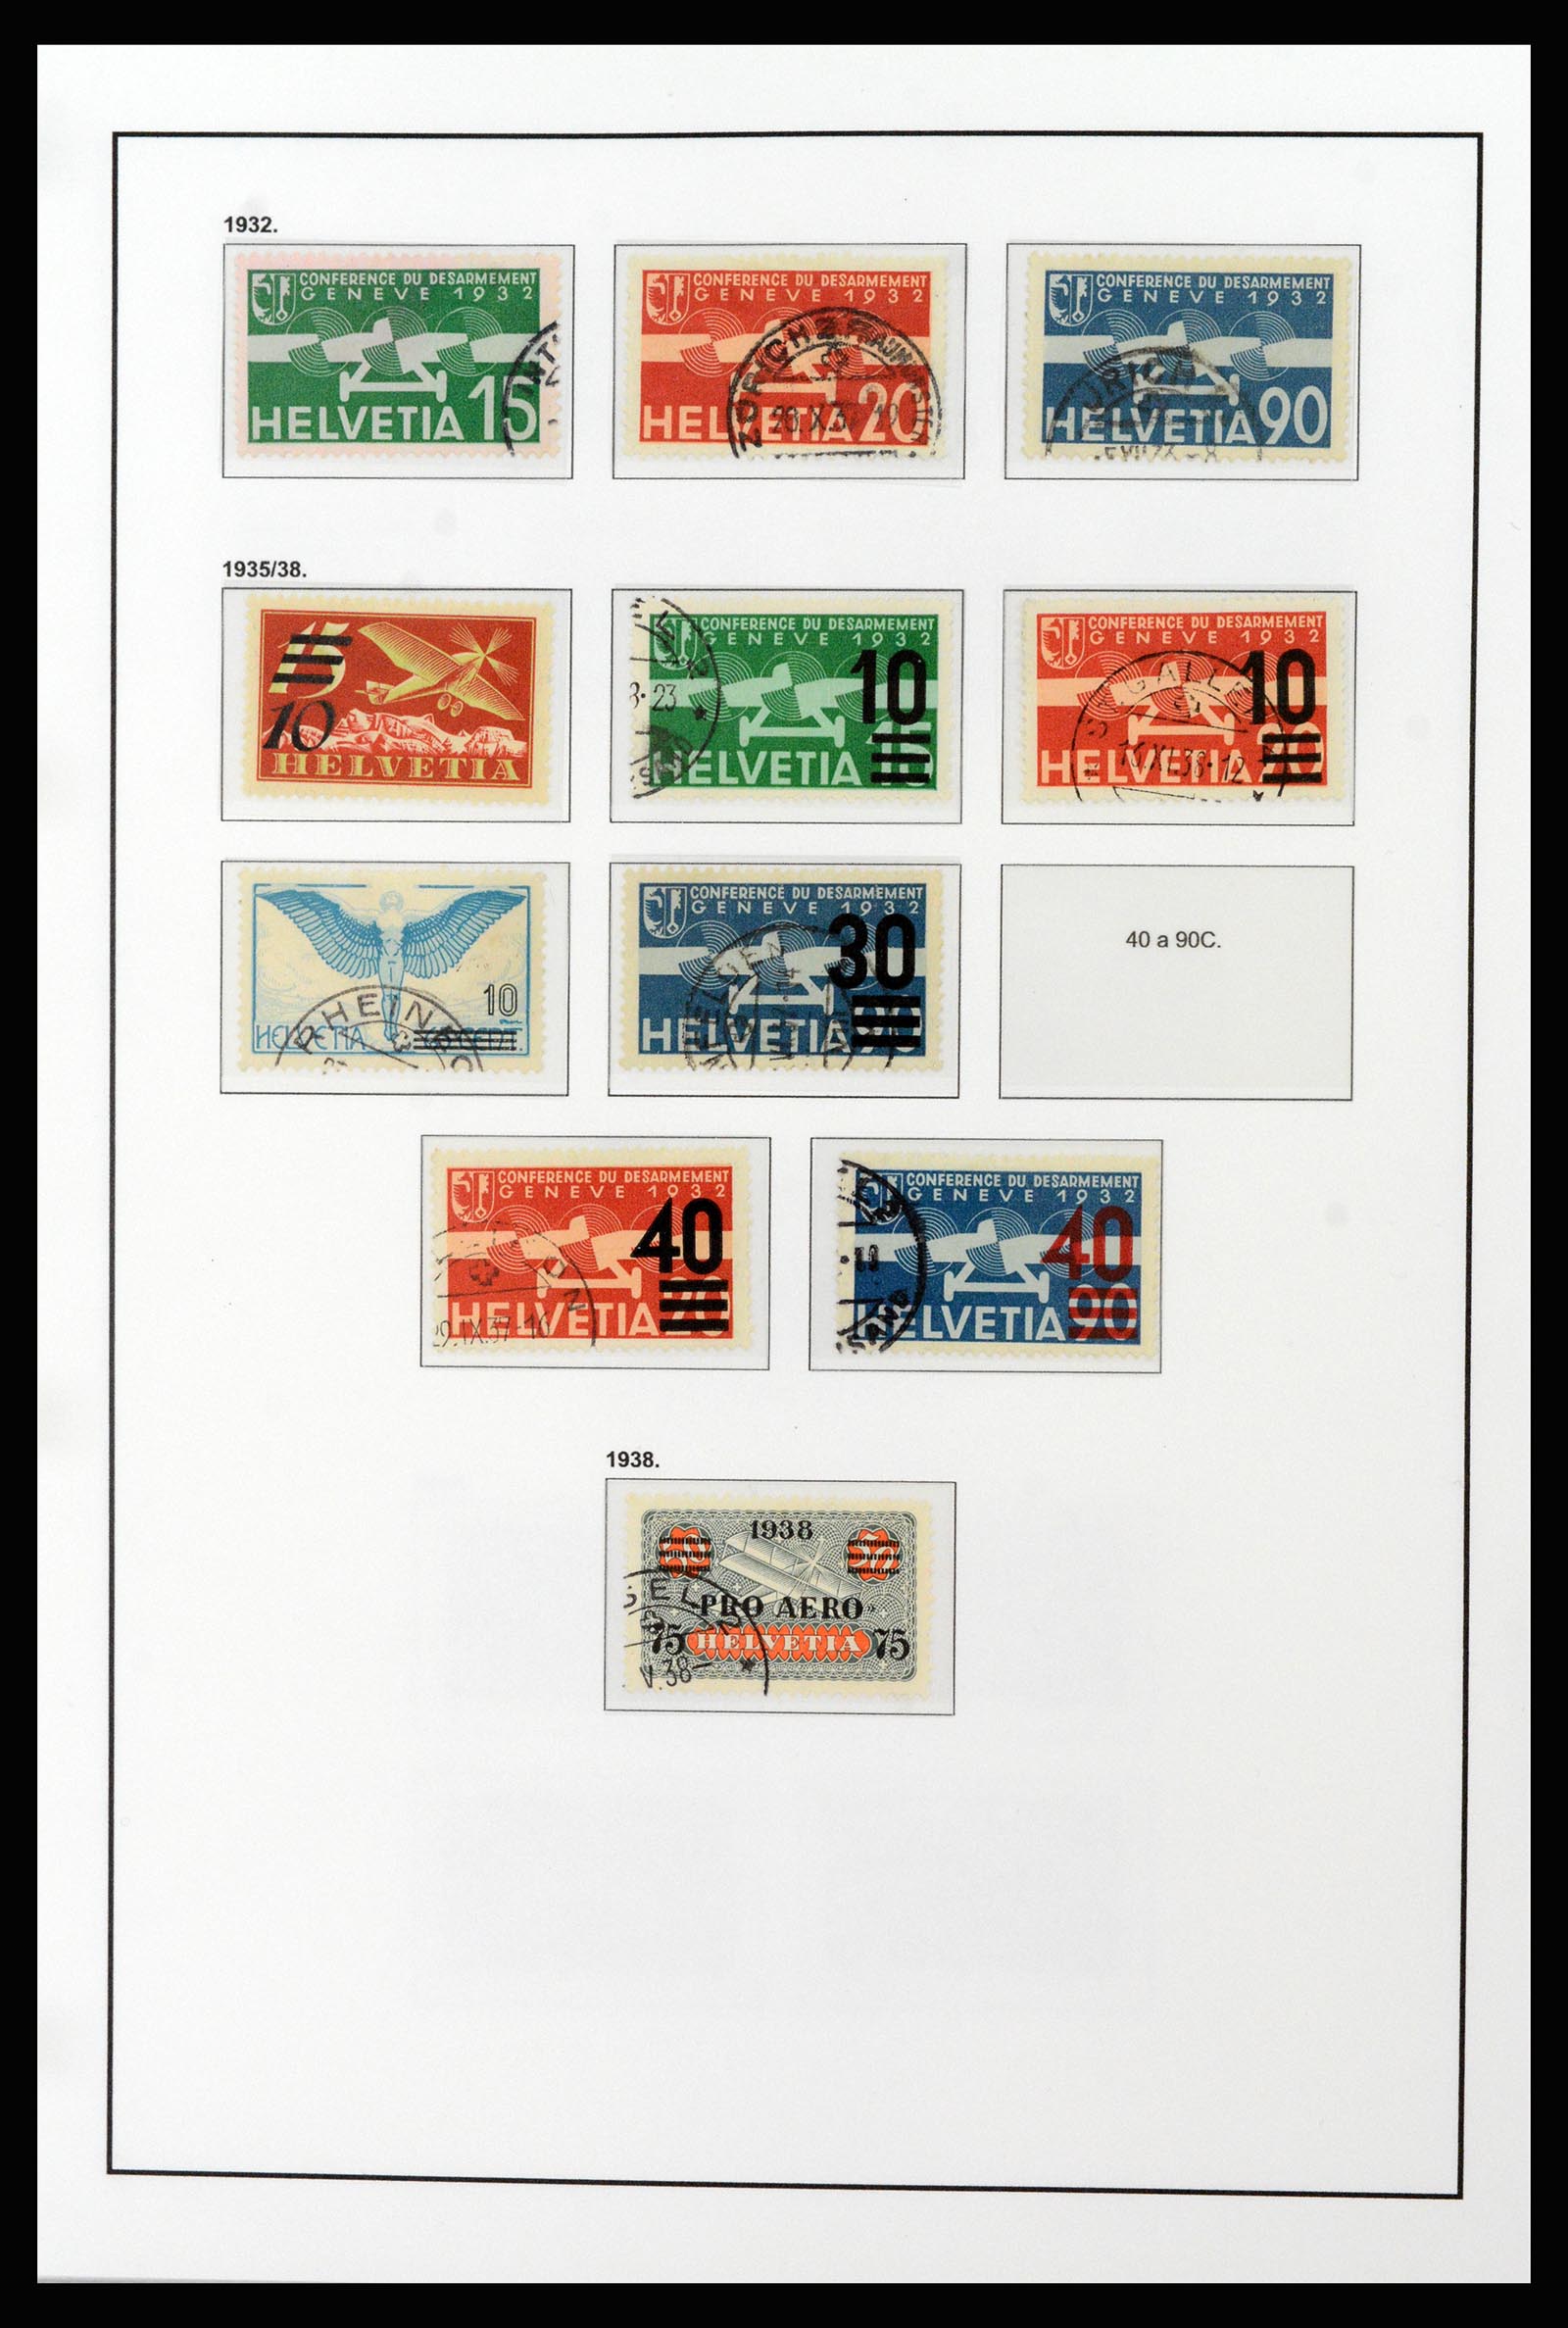 37225 096 - Stamp collection 37225 Switzerland 1854-2020.